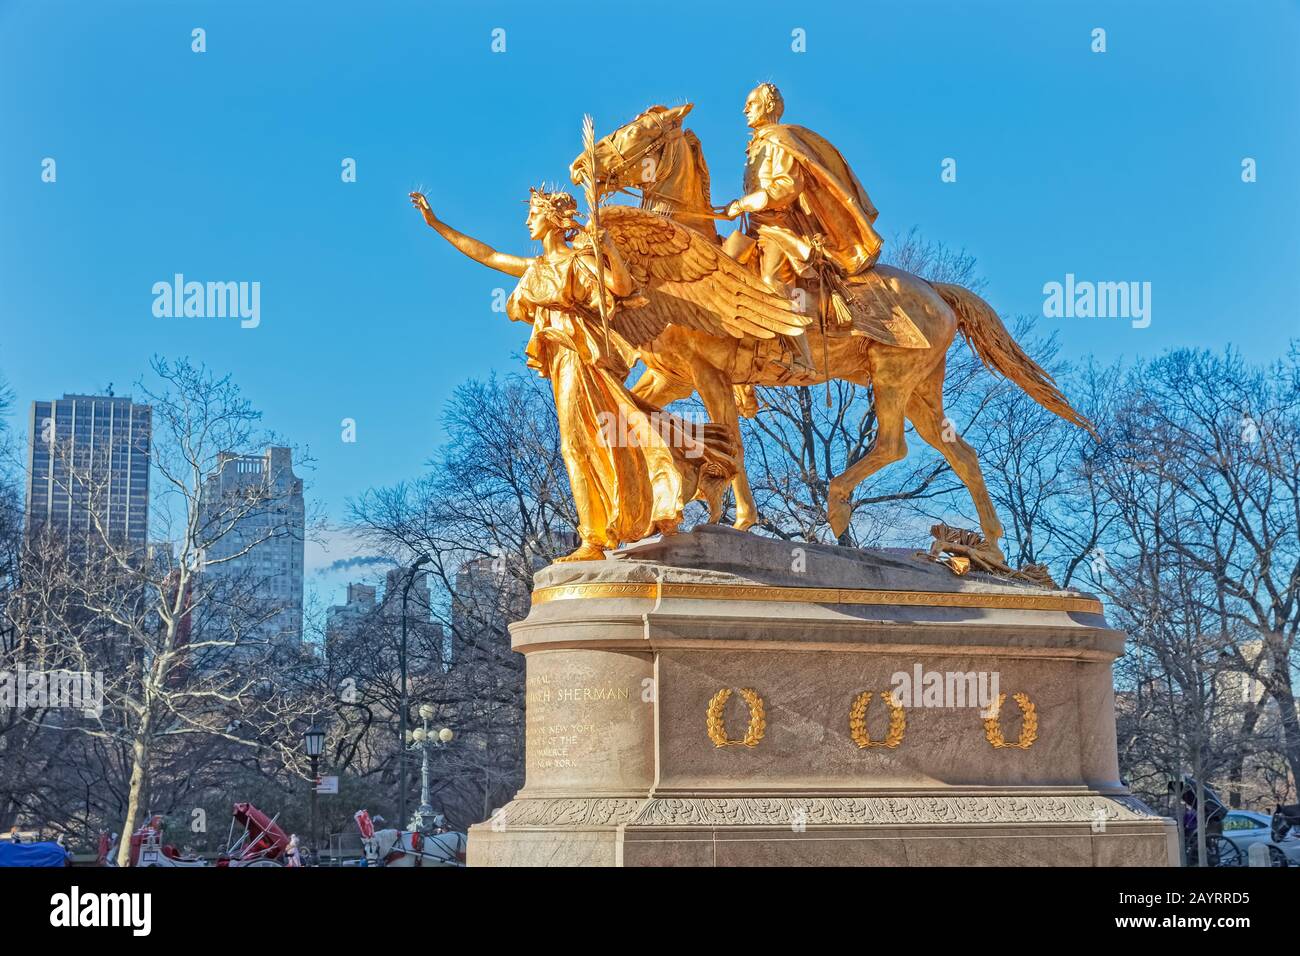 New York Central Park Sherman Memorial sculpture Stock Photo